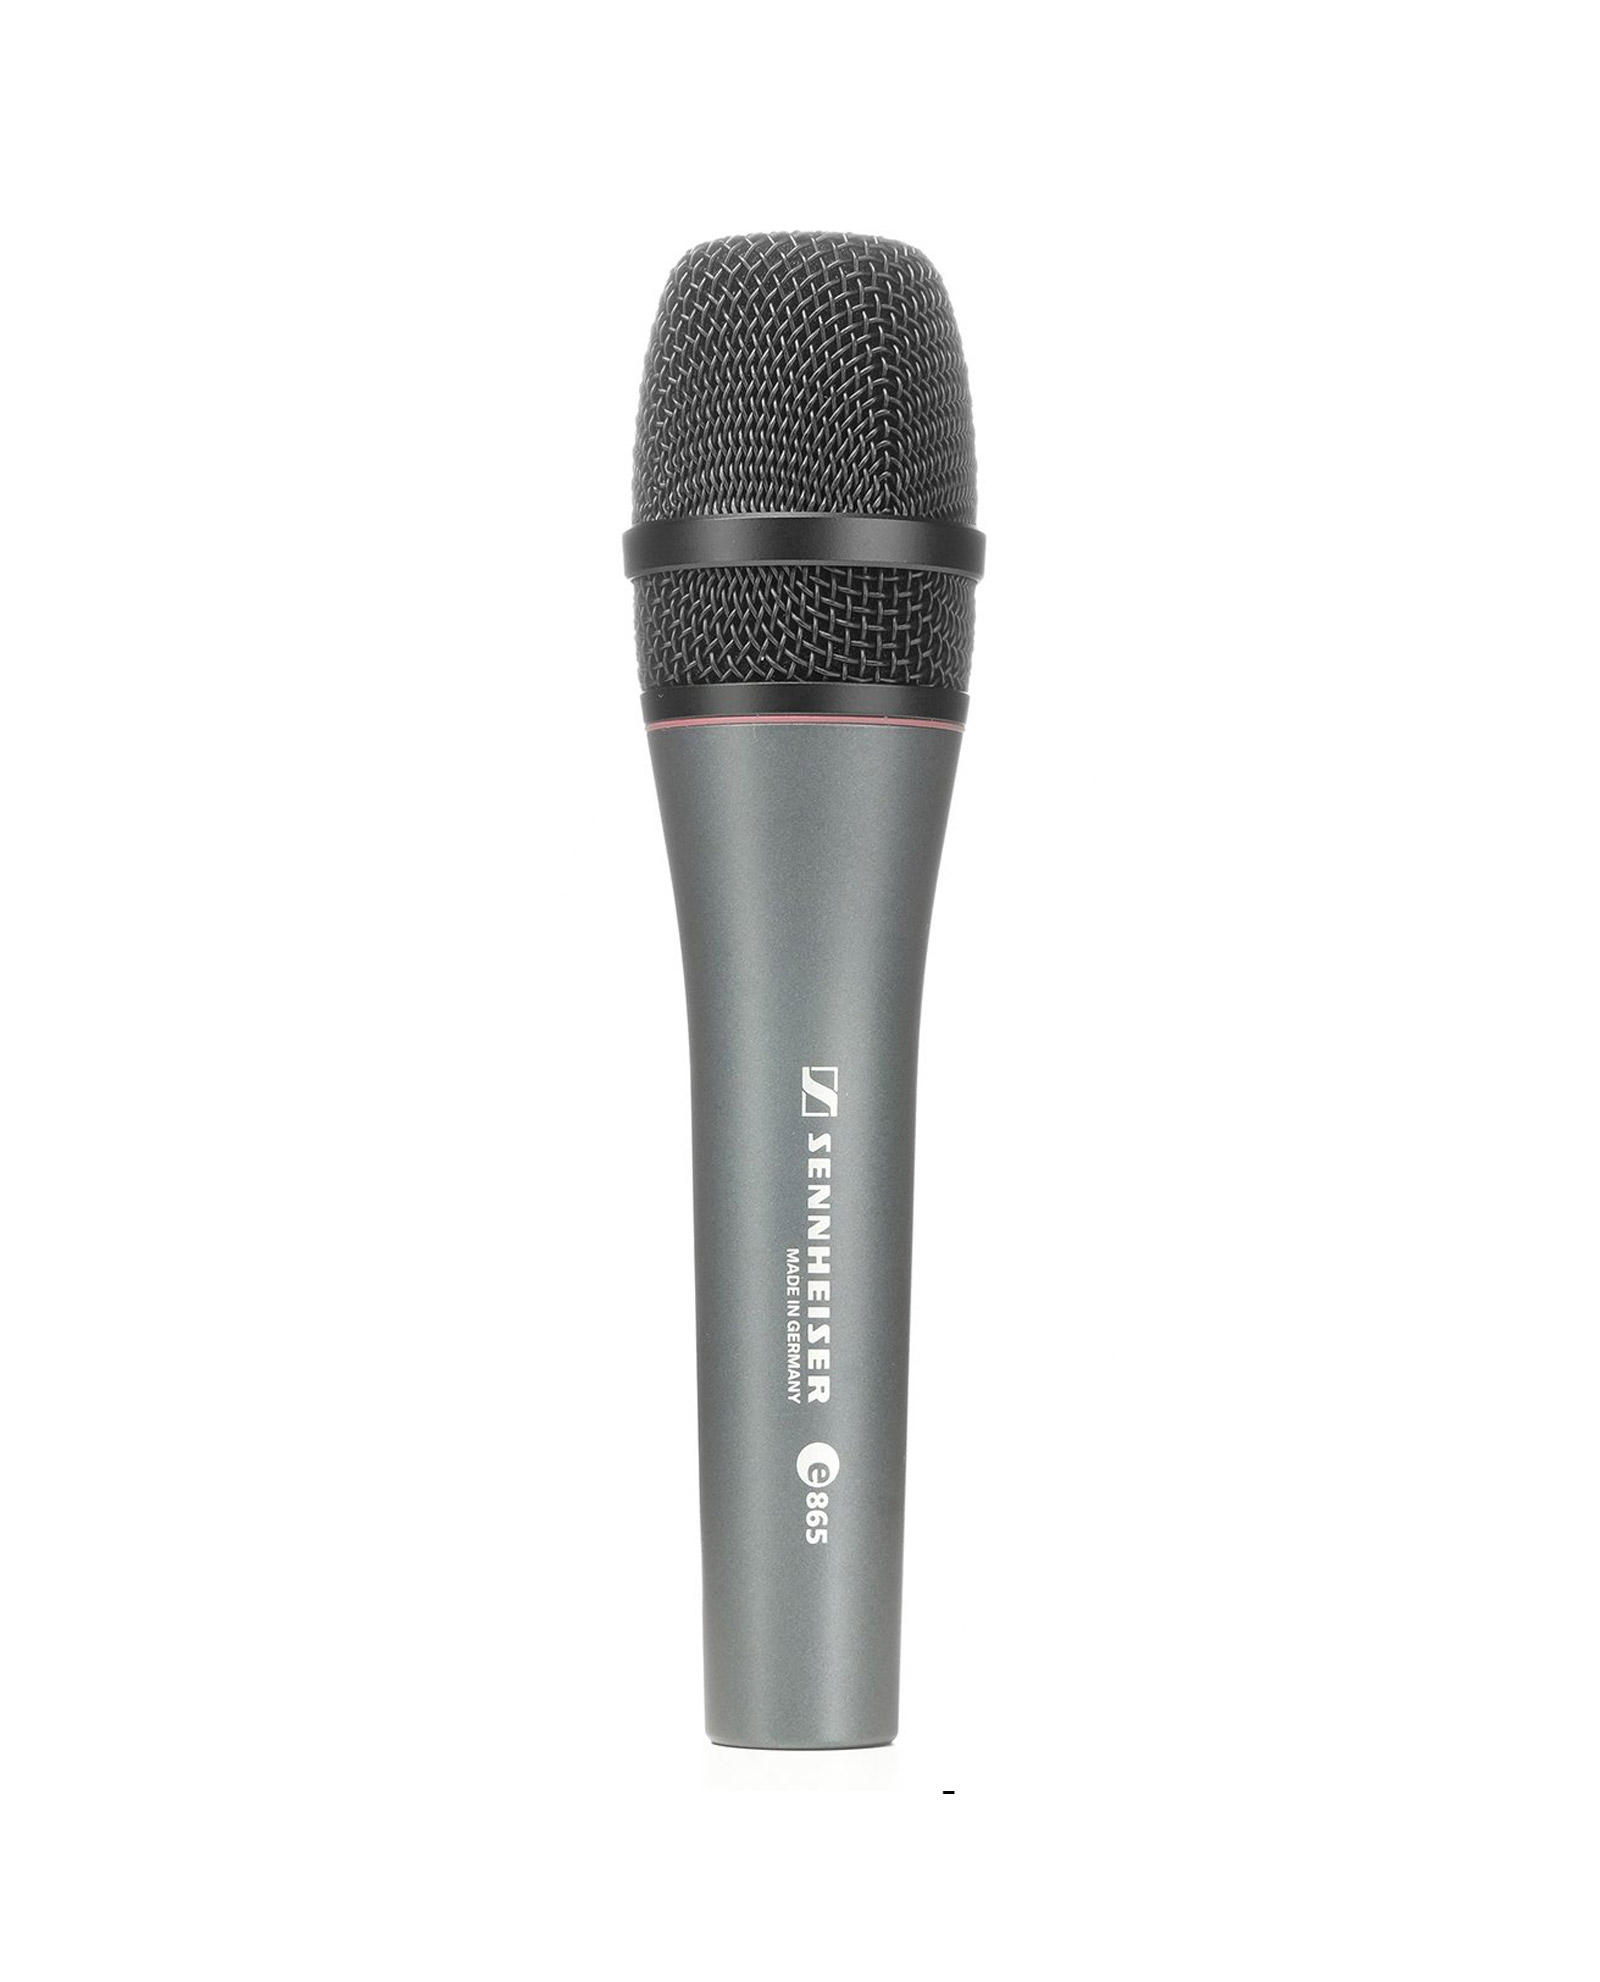 Sennheiser E 865 Live Vocal Microphone 1